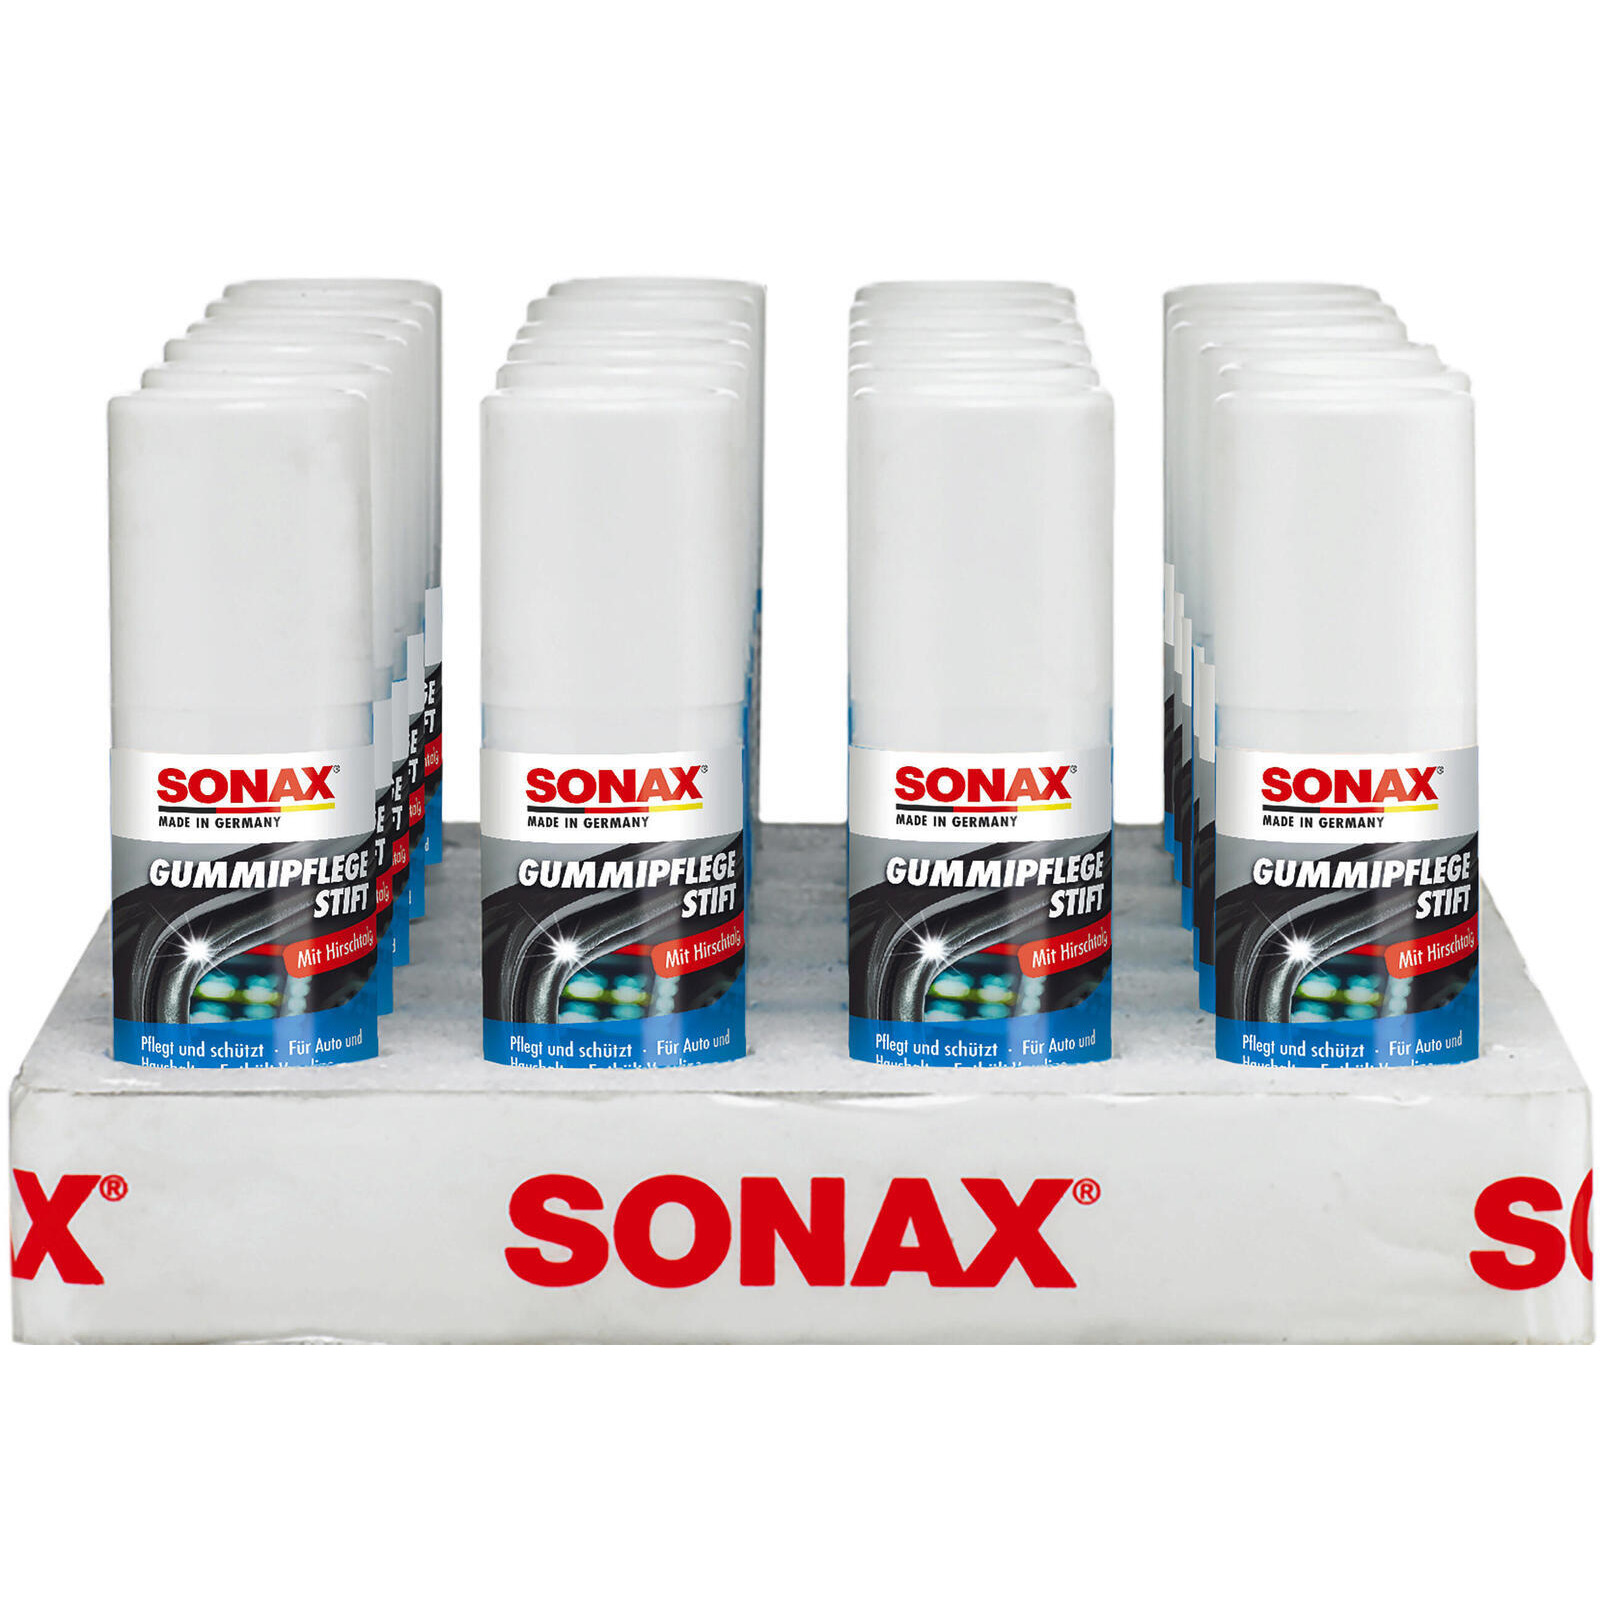 SONAX Gummipflegemittel GummiPflegeStift Thekendisplay